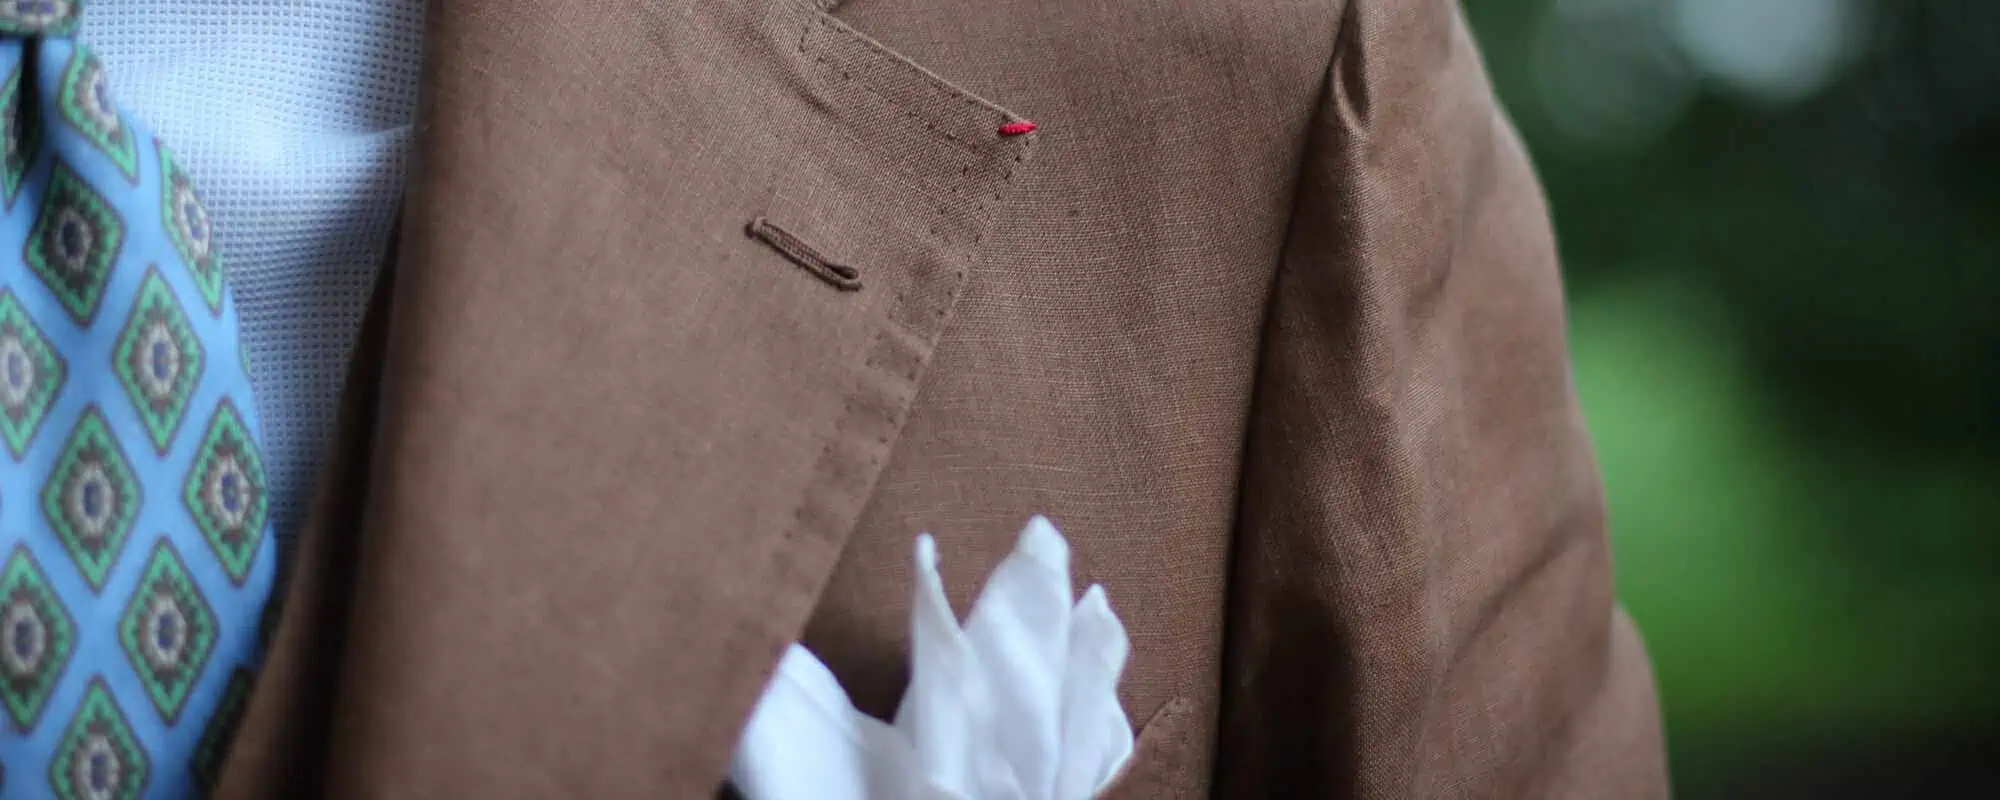 close-up photo of lapel buttonhole